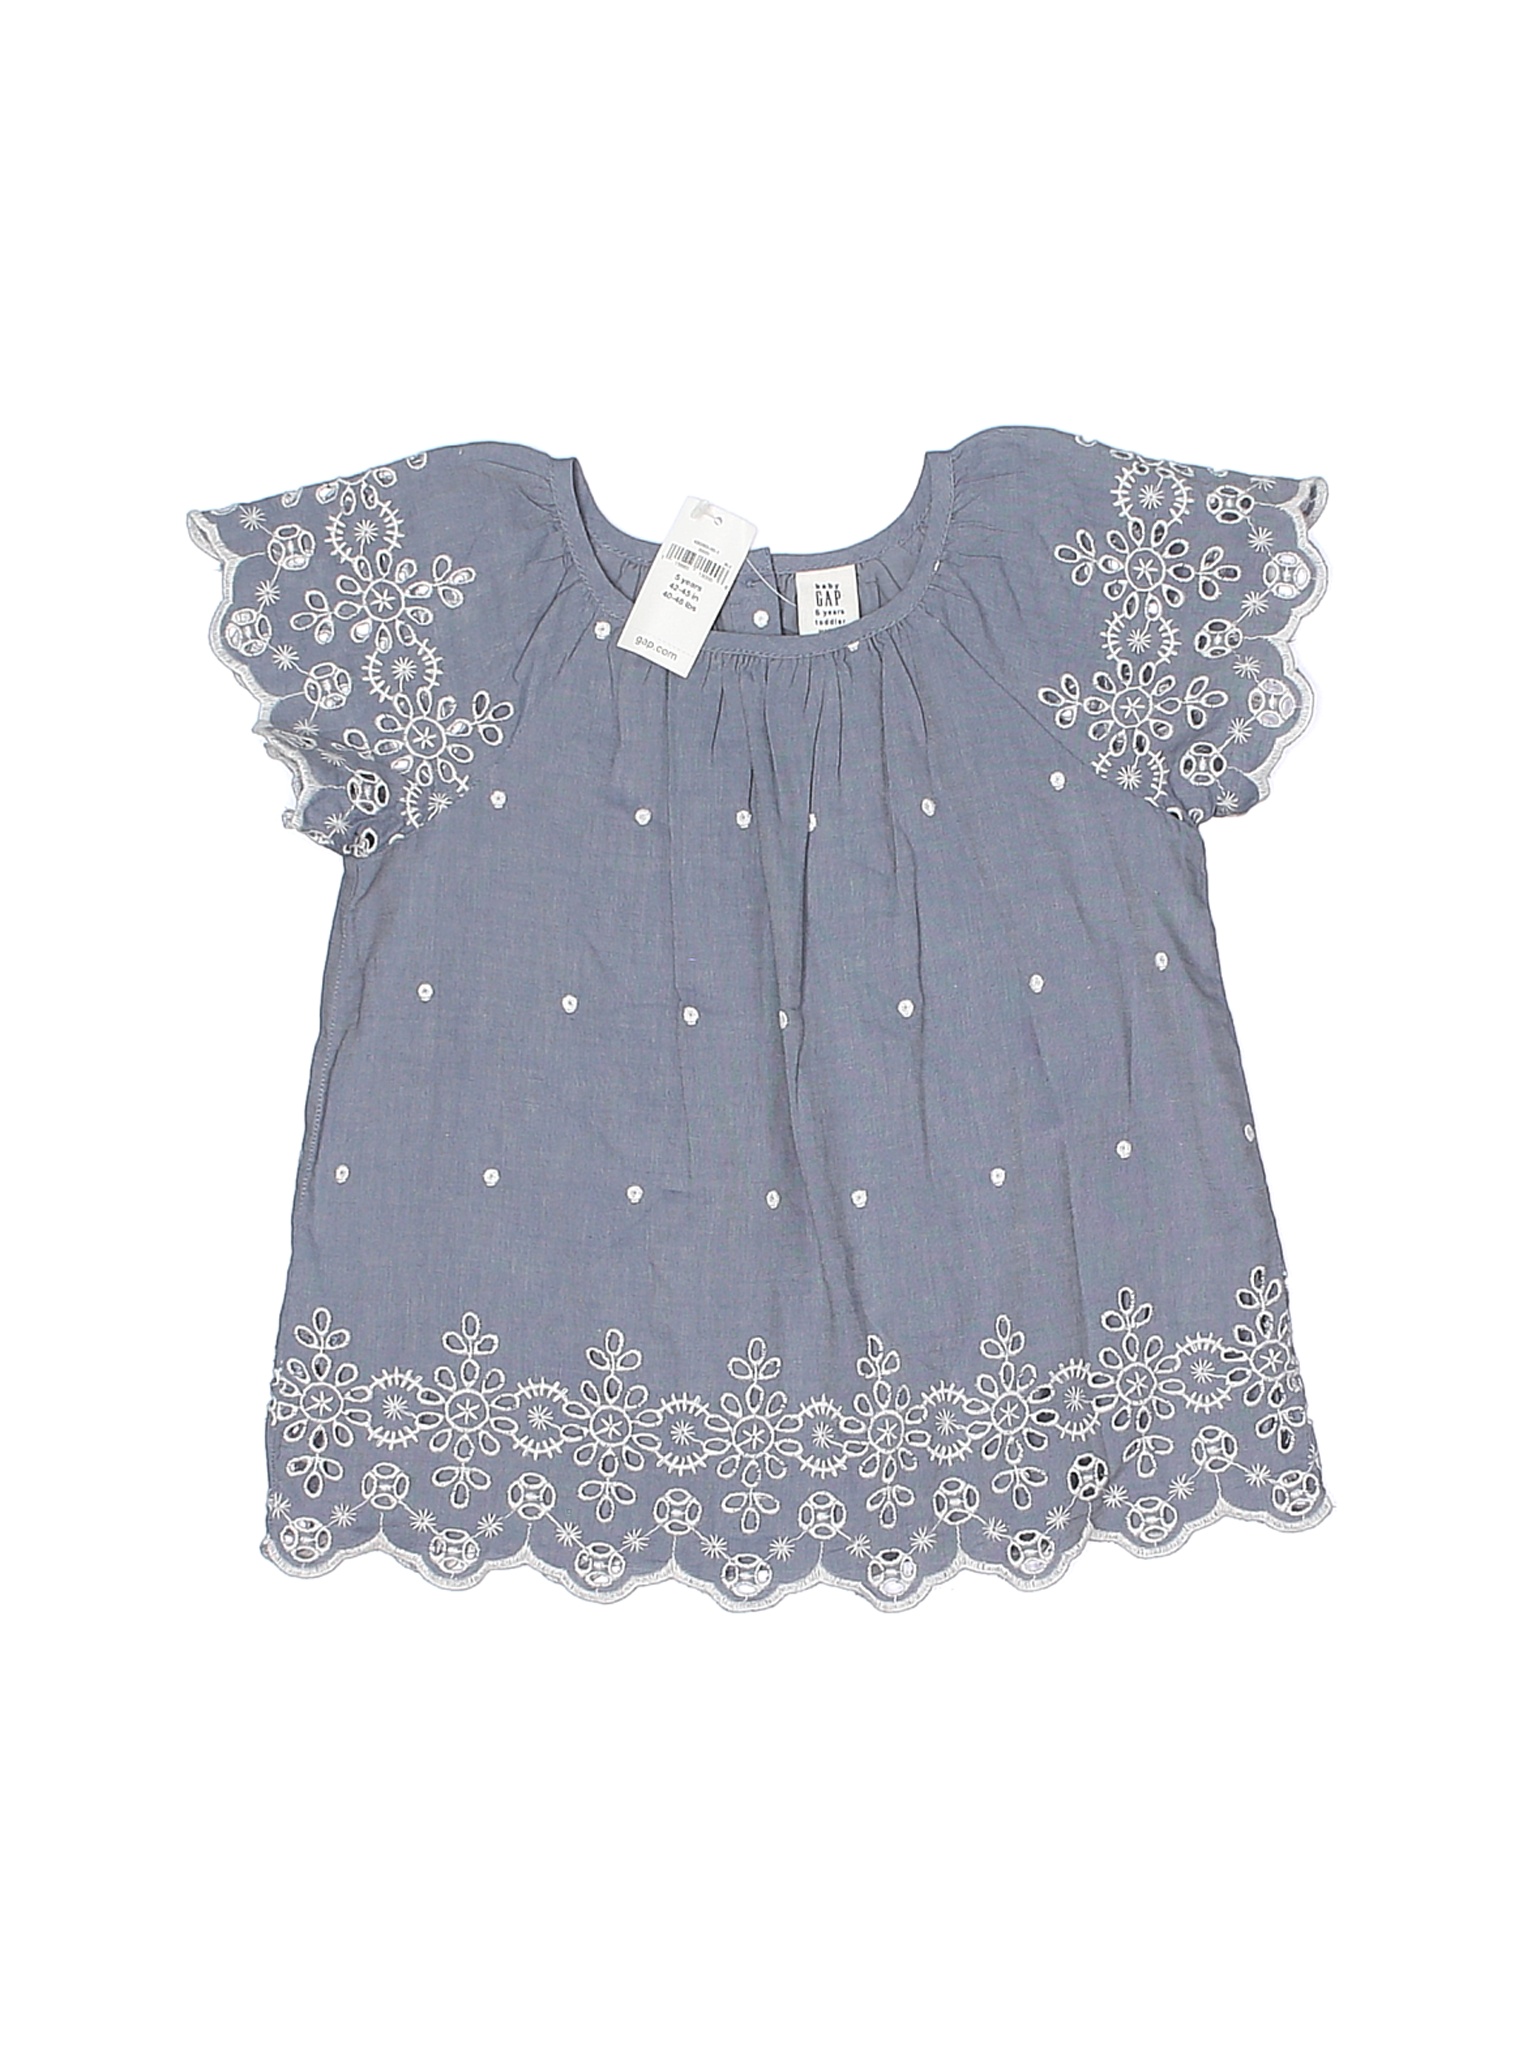 NWT Baby Gap Girls Blue Short Sleeve Blouse 5T | eBay